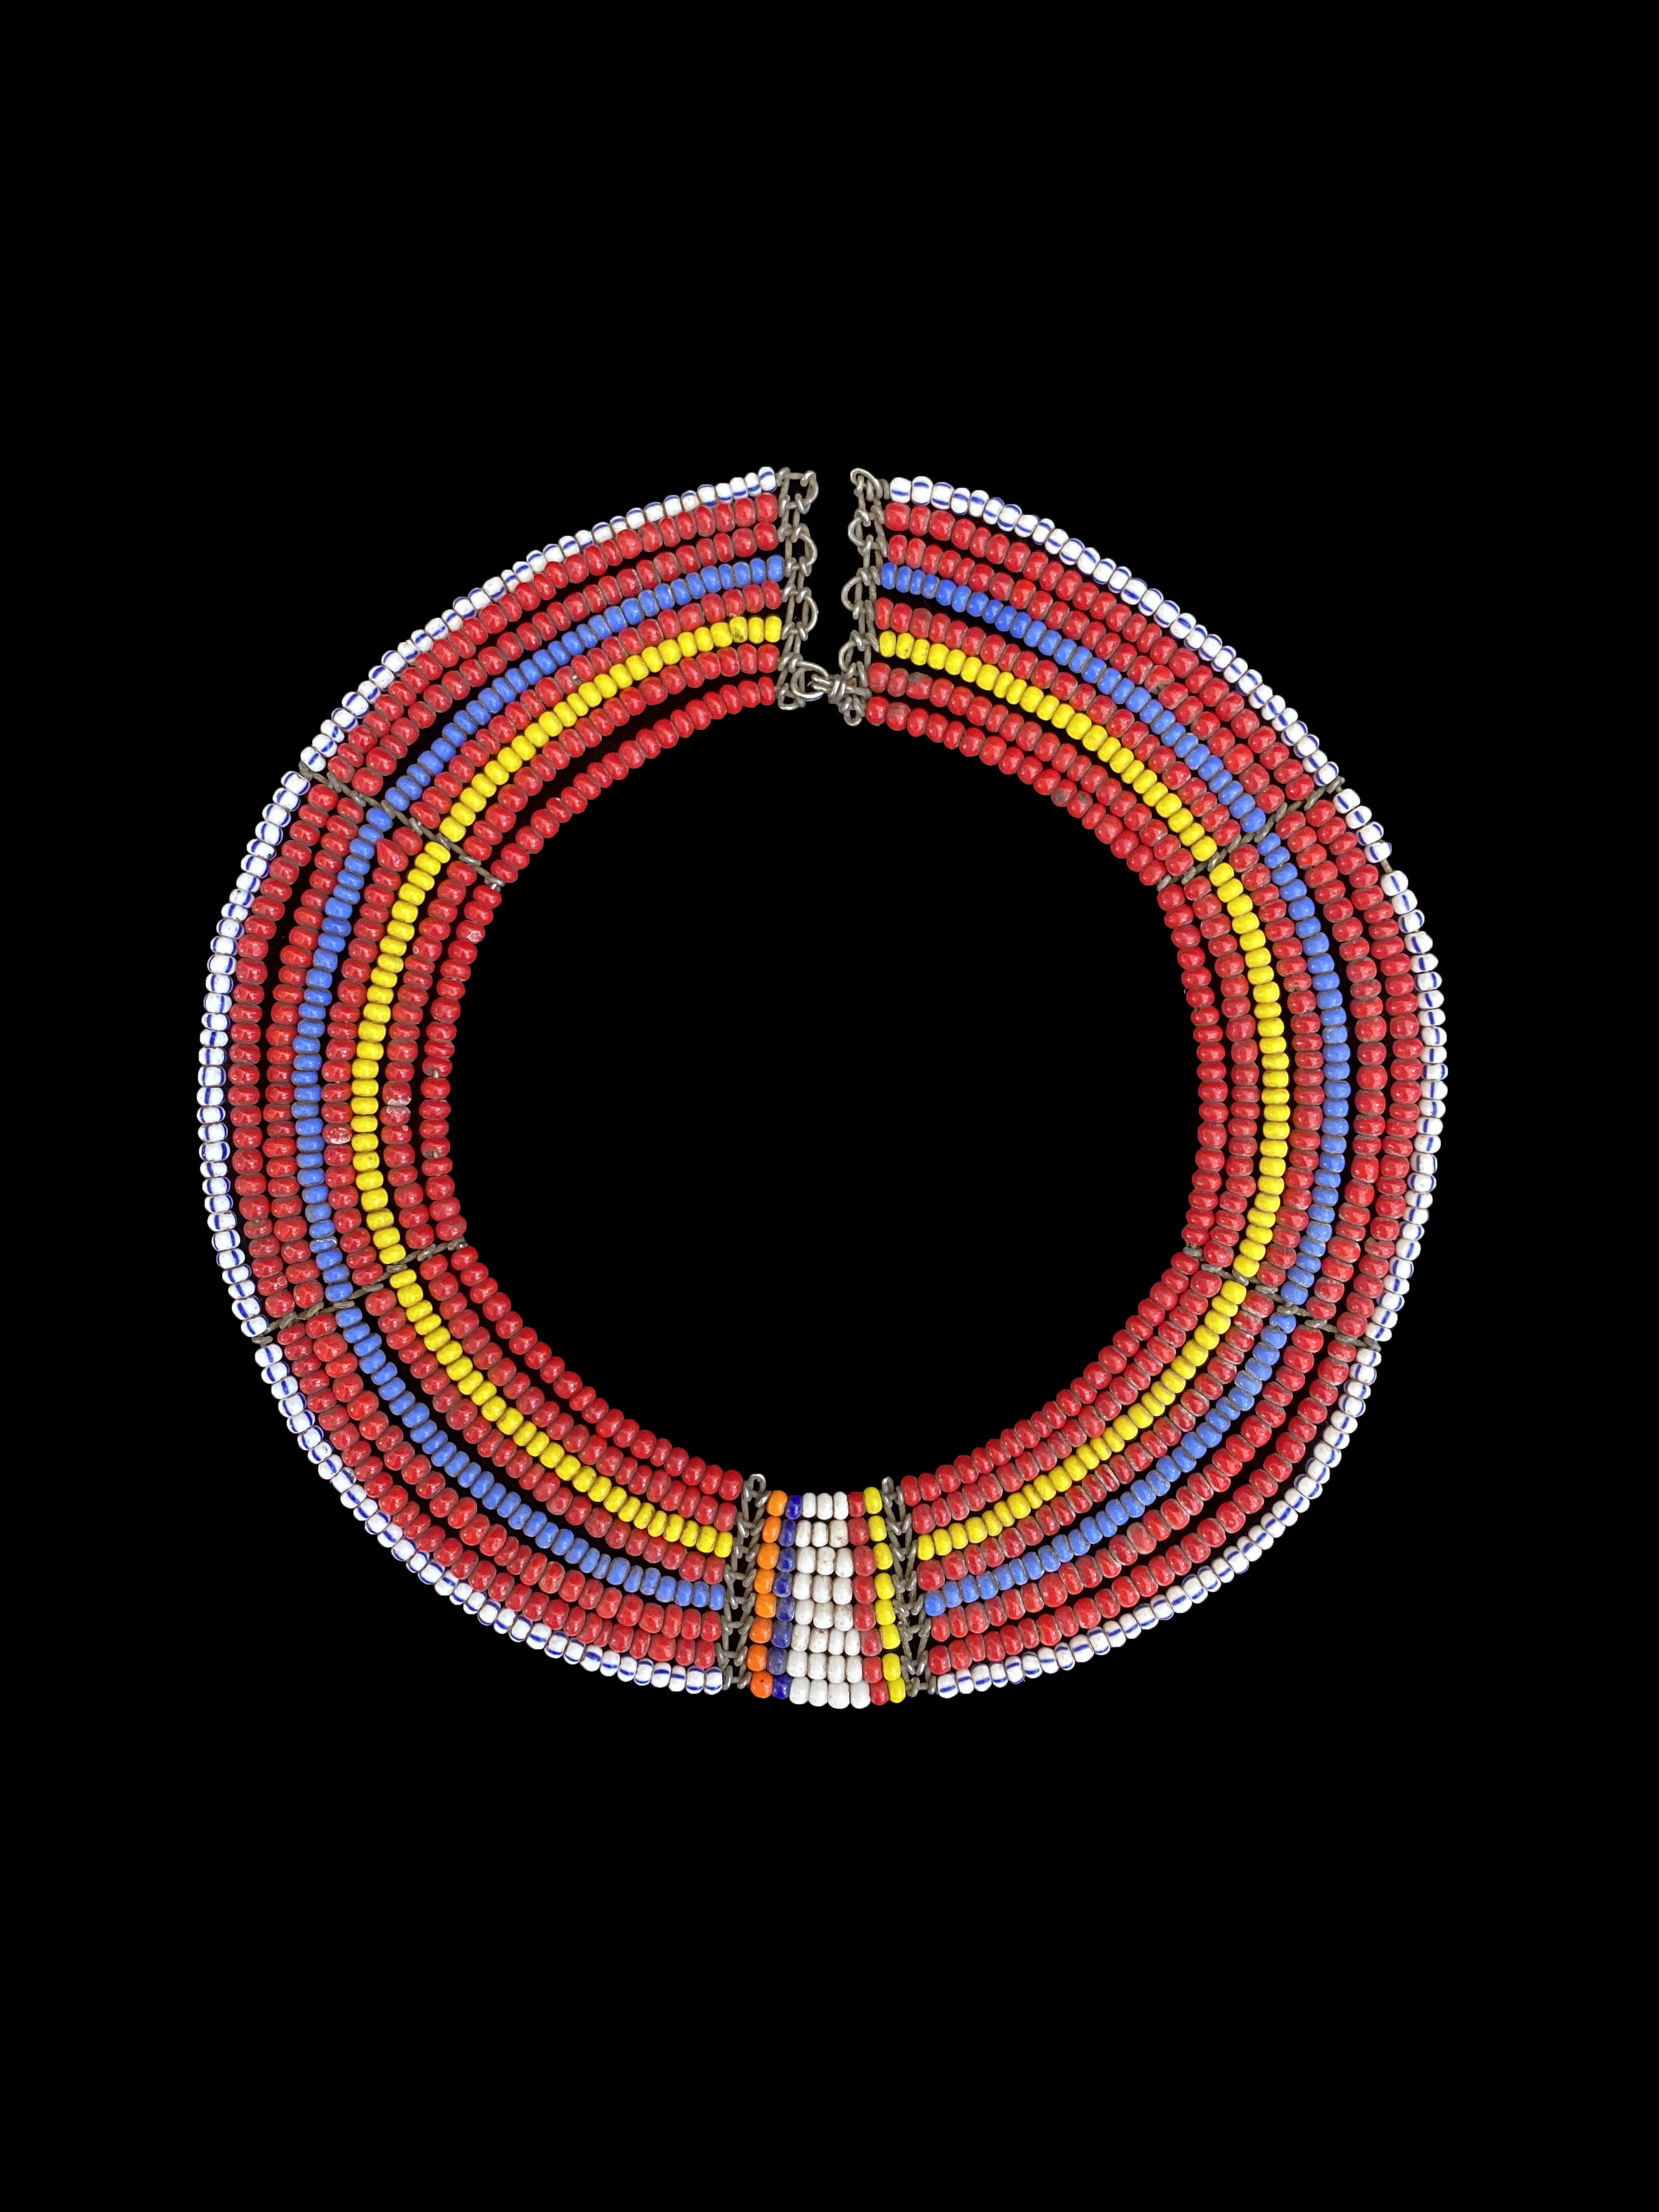 Reddish Beaded Necklace/Collar - Maasai People, Kenya/Tanzania east Africa